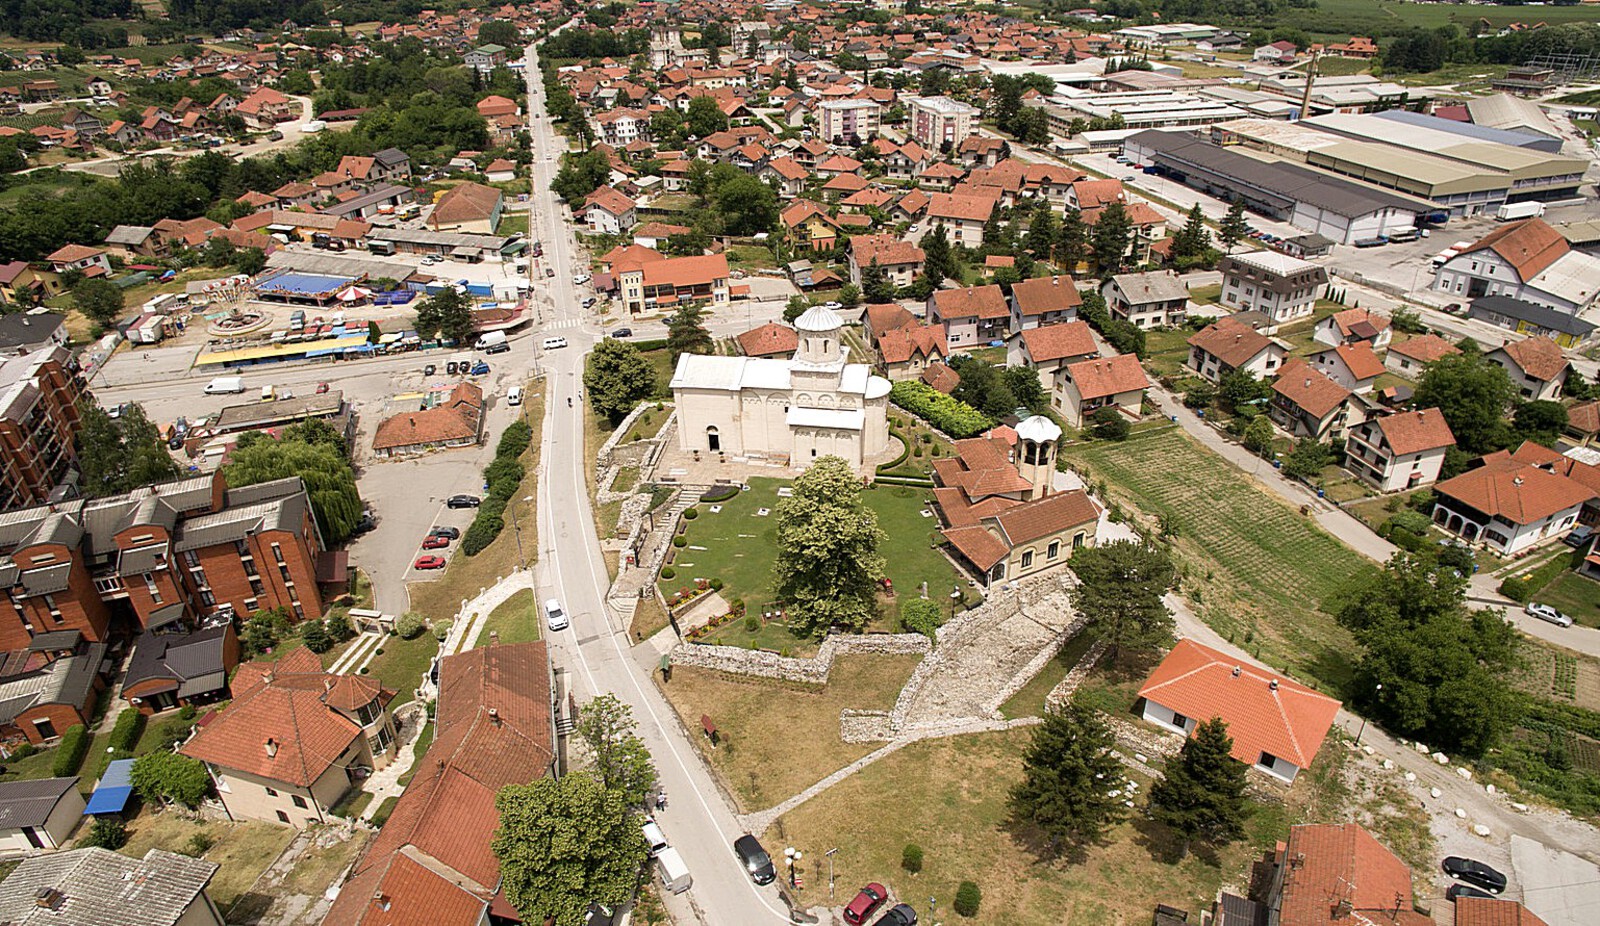 City of Arilje with the church